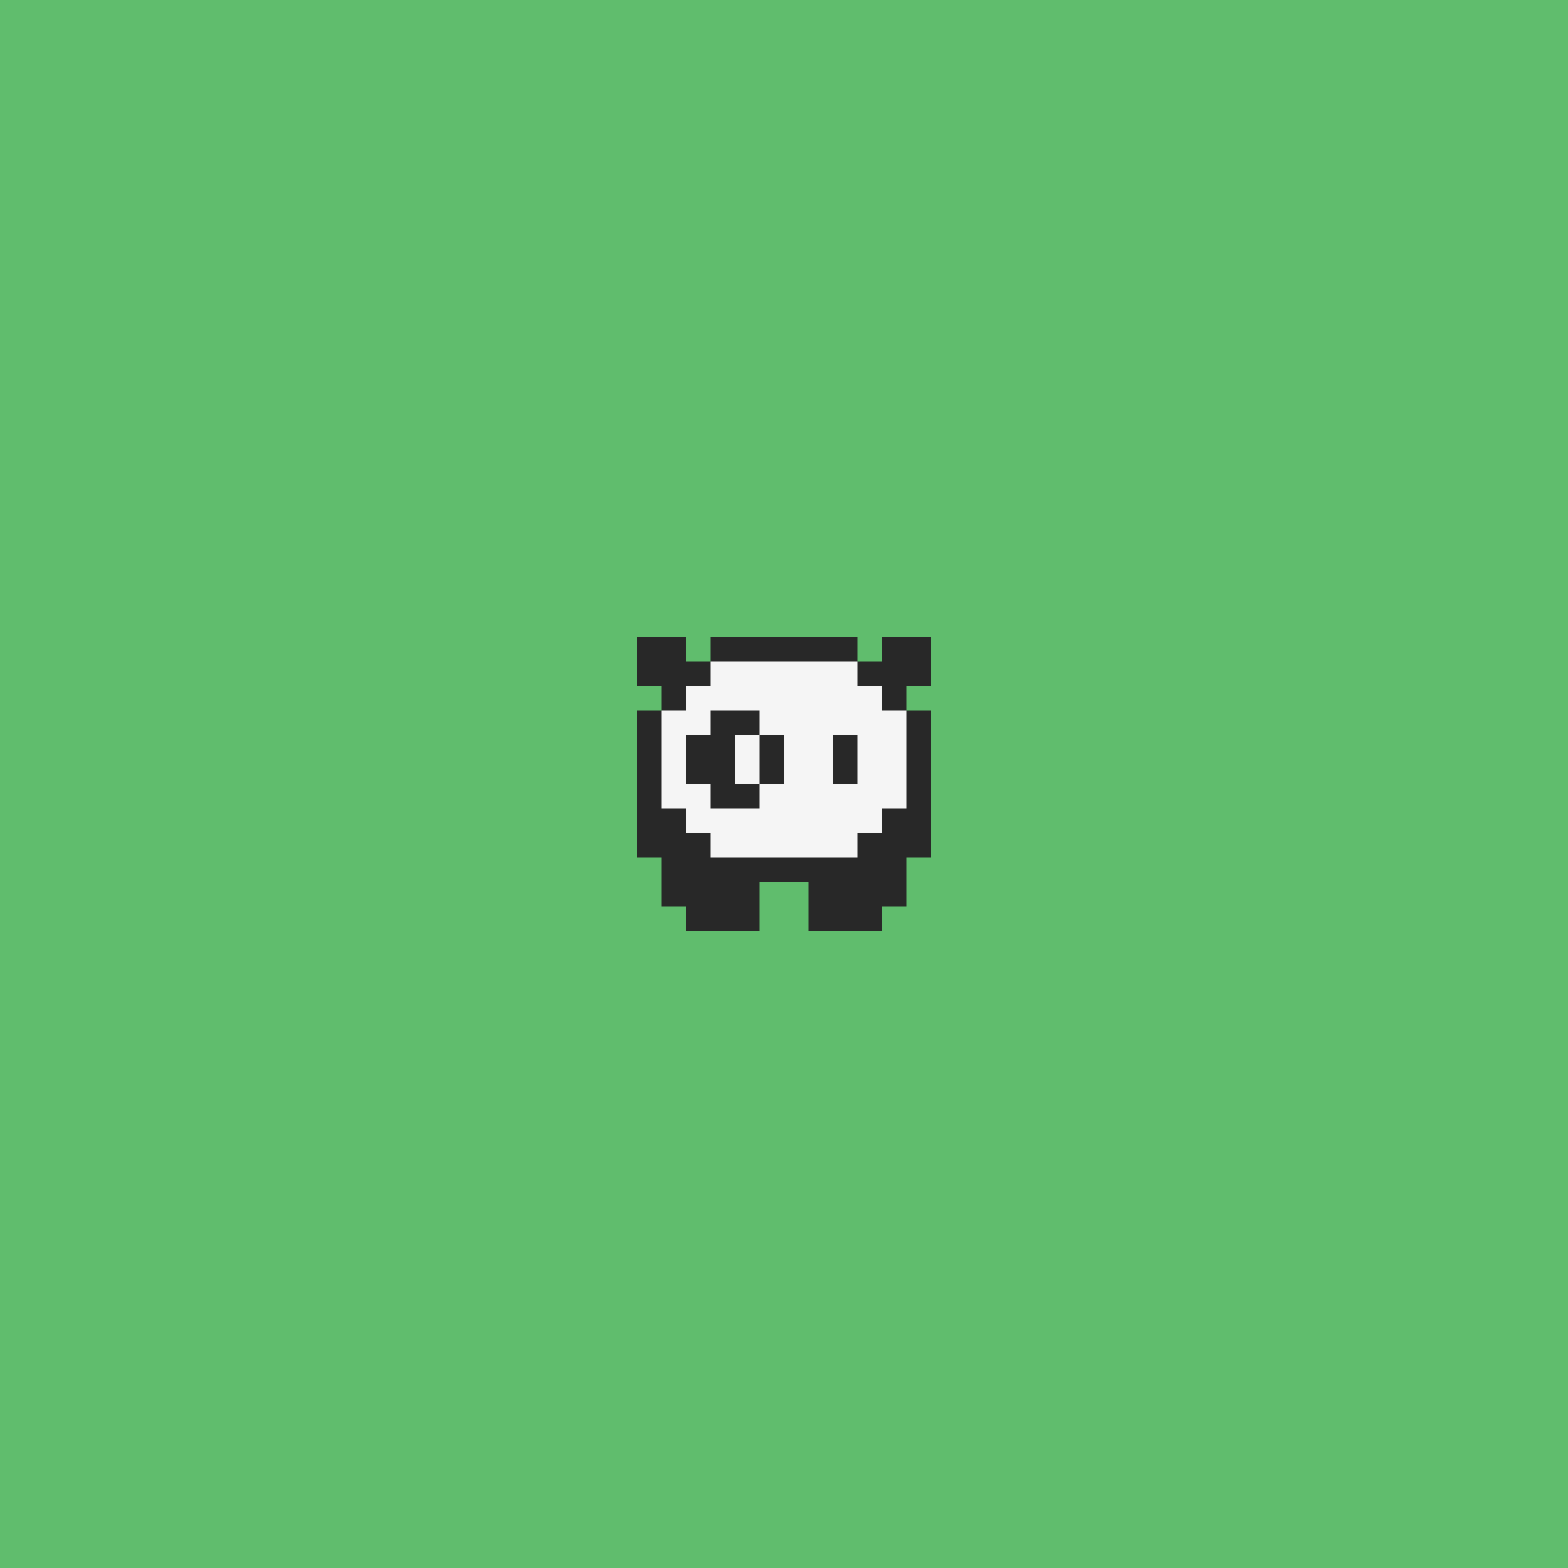 Pixel art version of the Bored Panda logo